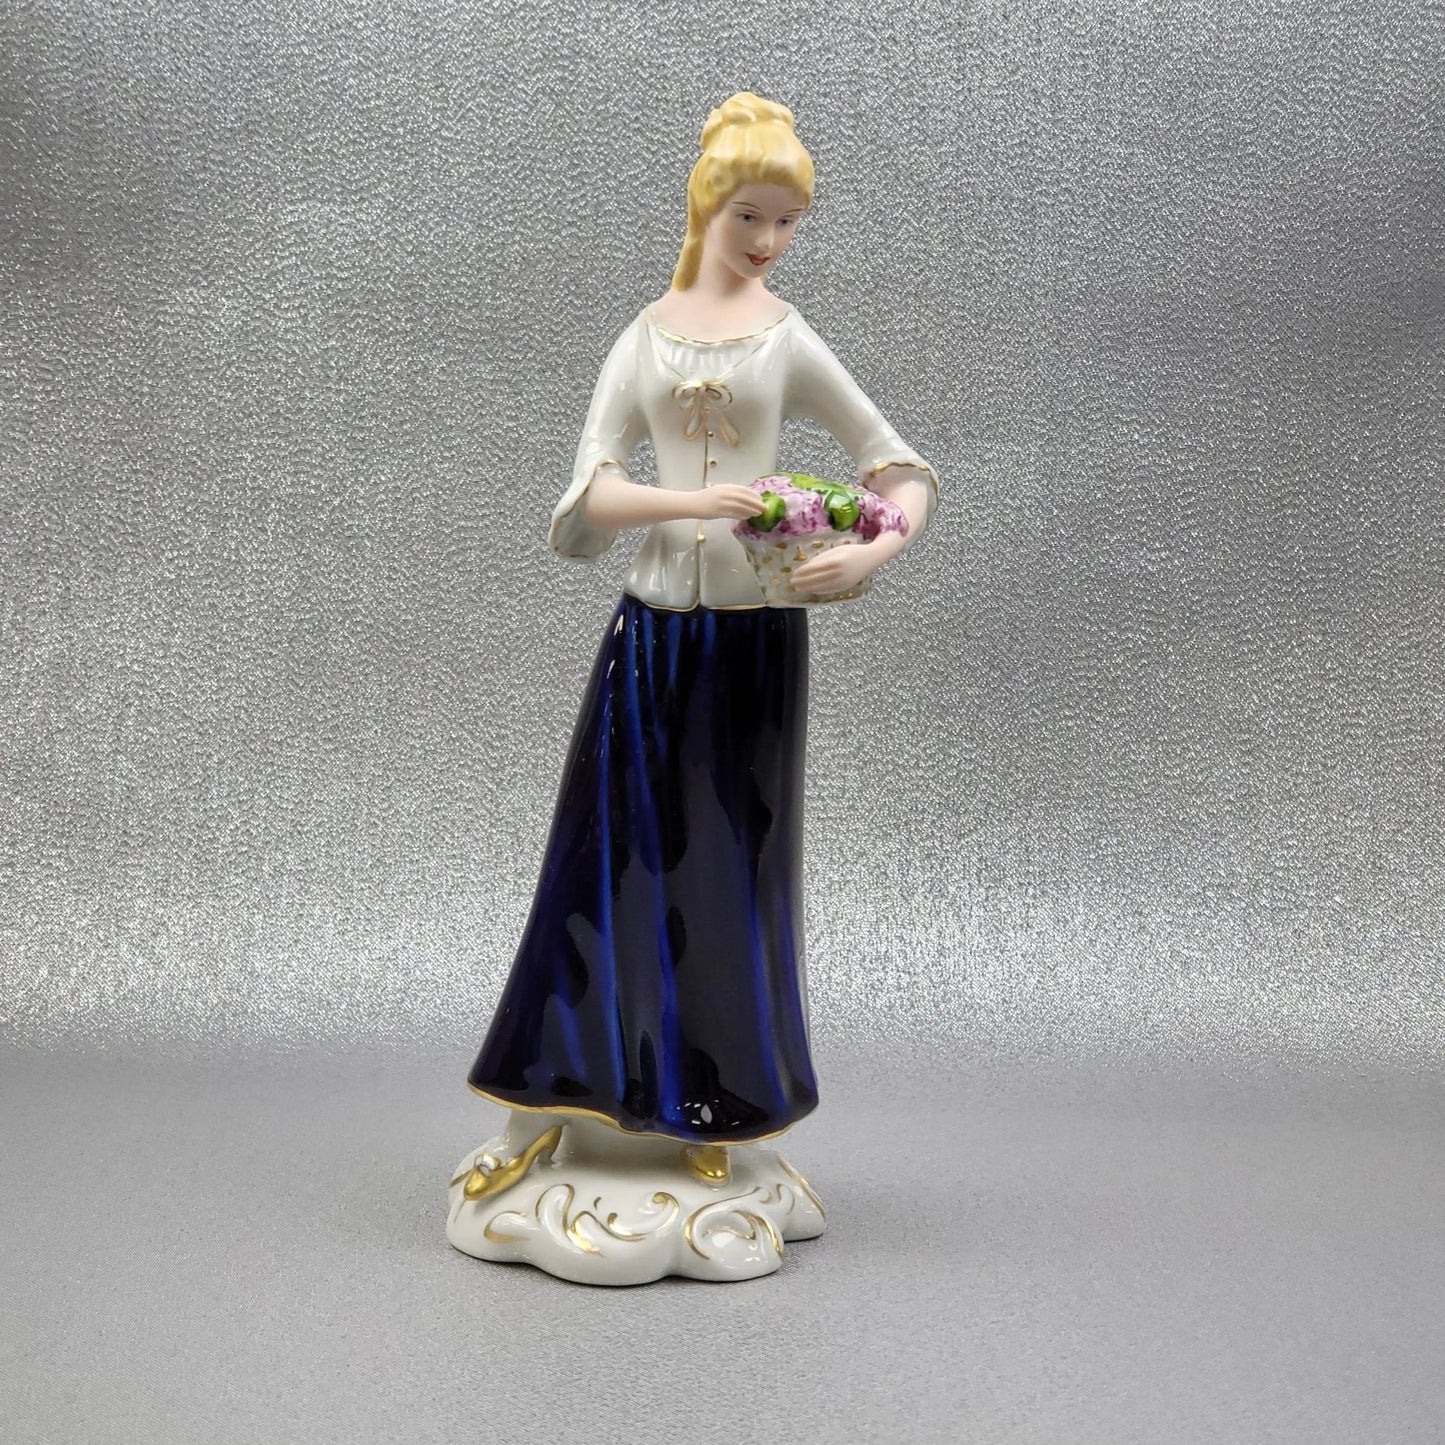 Porcelain figurine "Winemaker" by Royal Dux Bohemia.